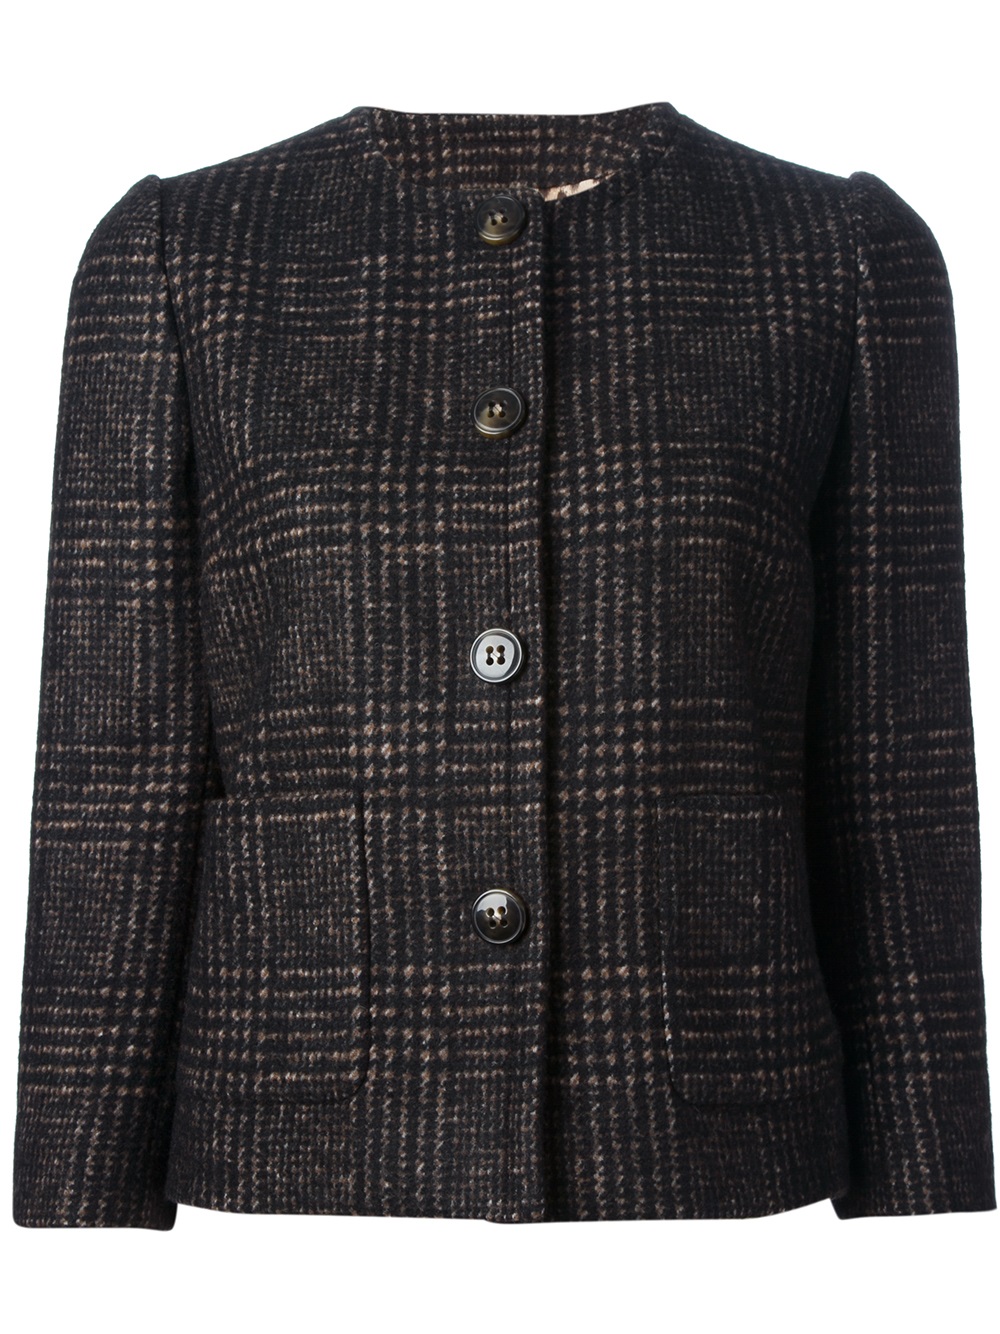 Lyst - Dolce & gabbana Tweed Jacket in Black